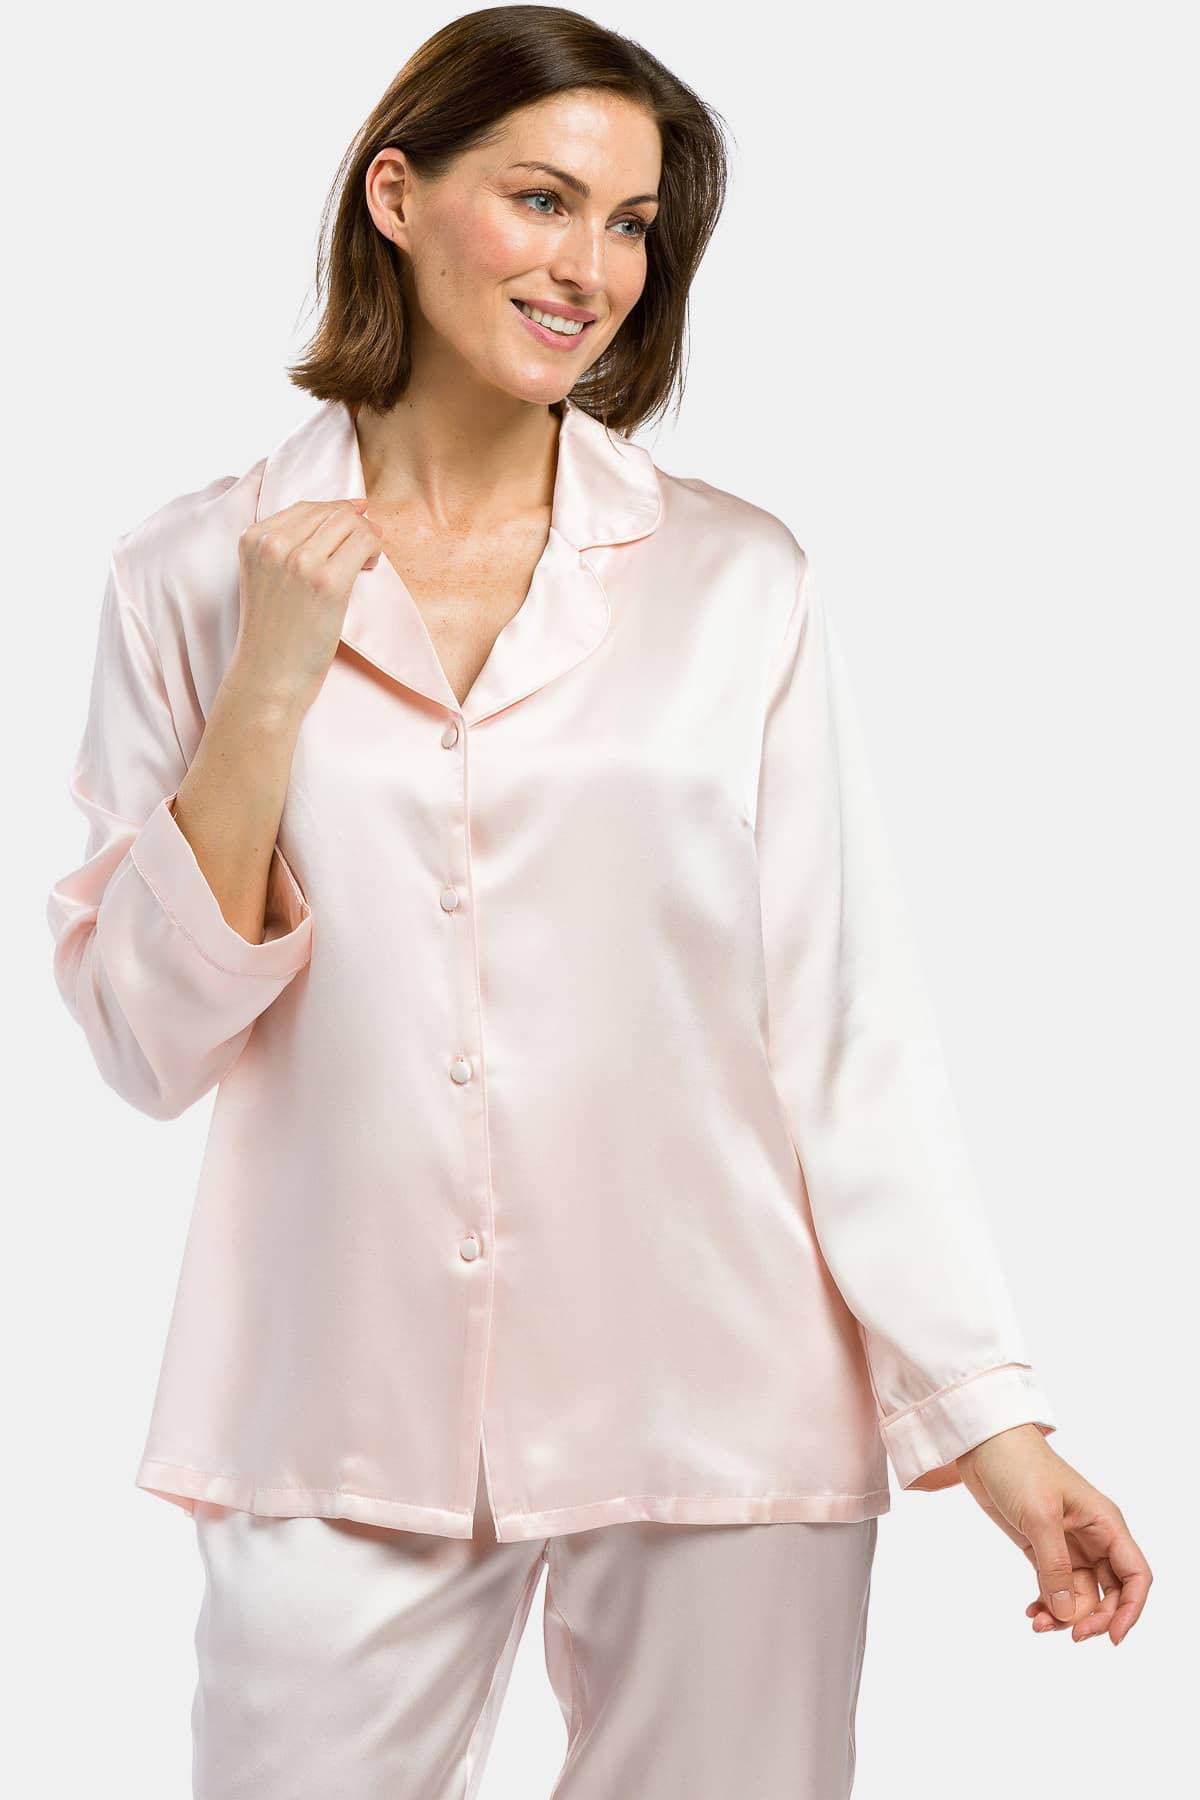 Womens Silky Satin Sleepwear Nightshirt Sleep Shirt Dresses White